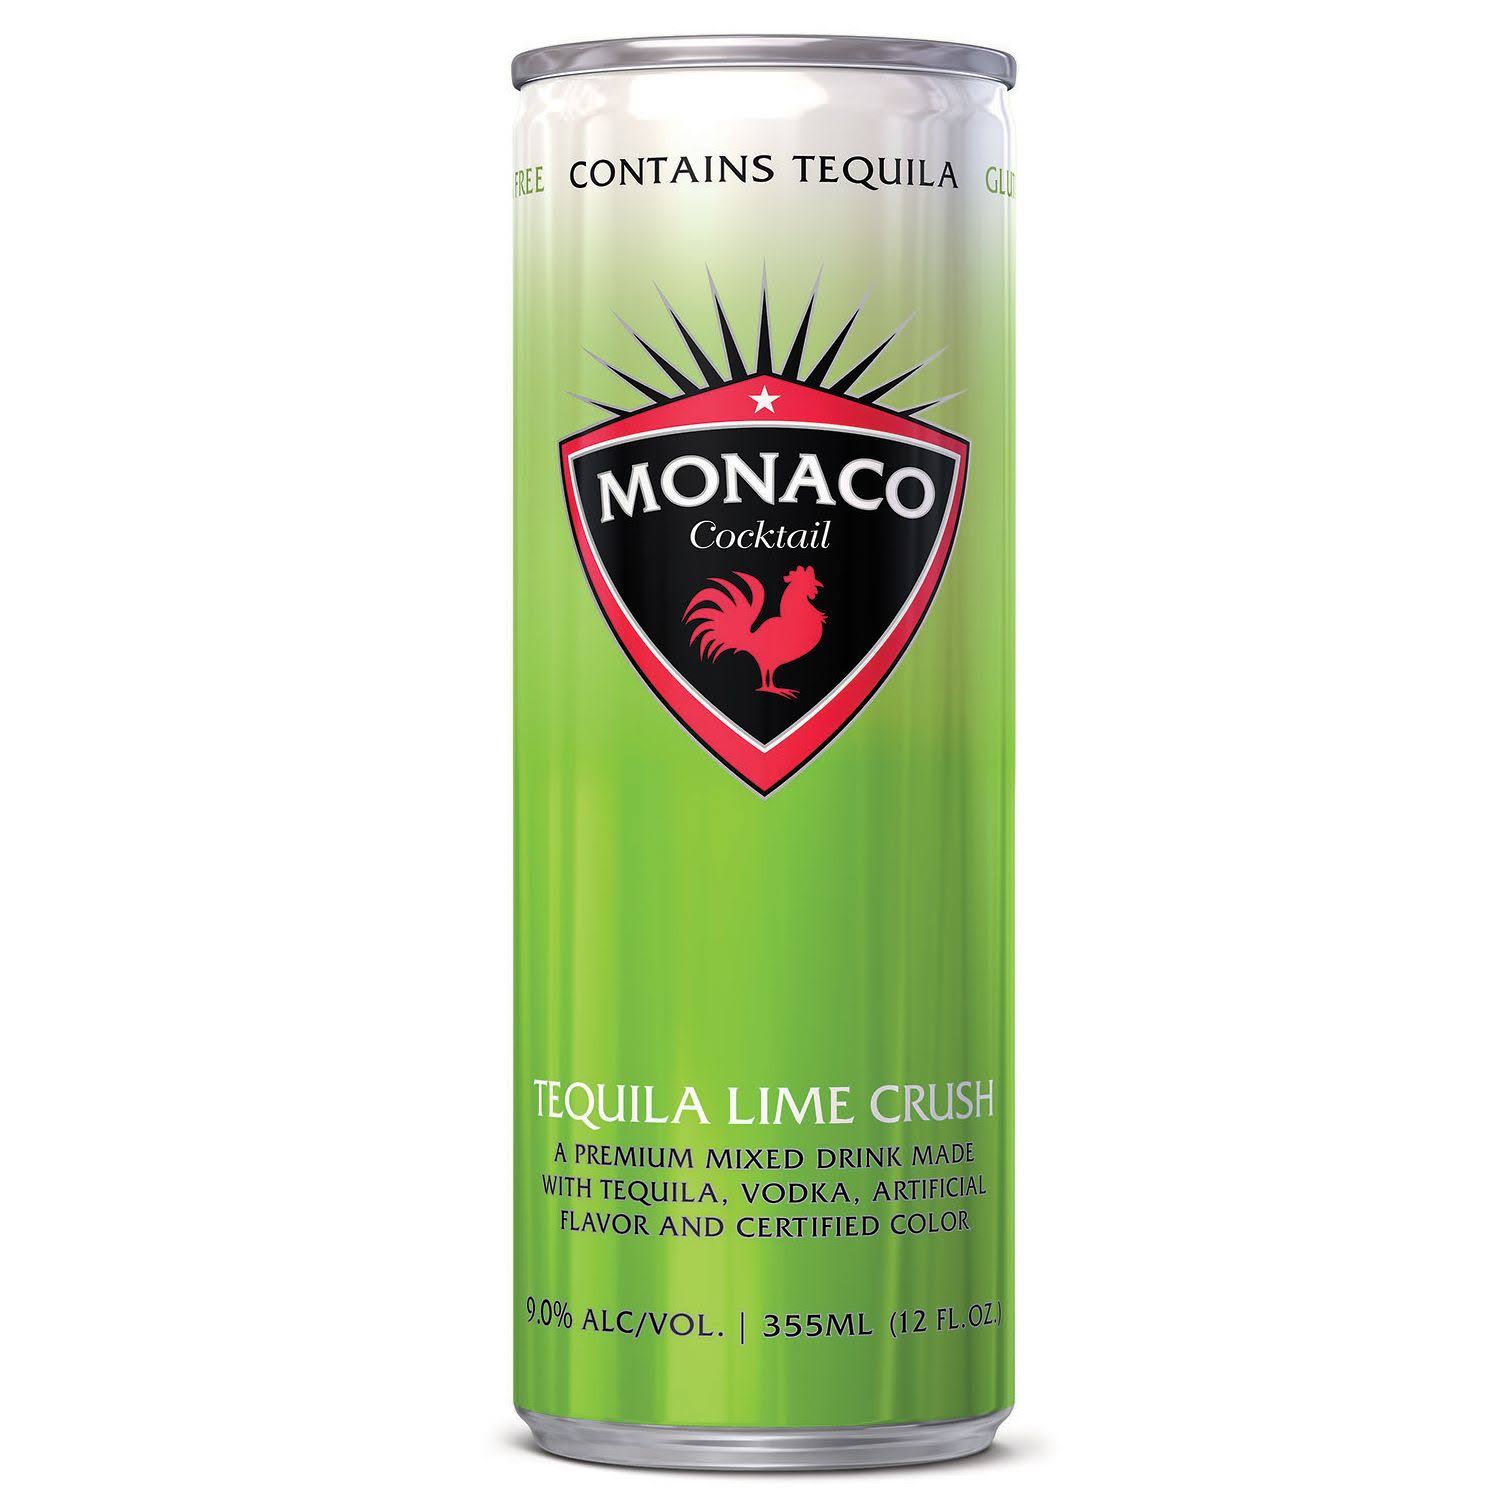 Monaco Tequila Lime Crush Cocktail - 12 fl oz